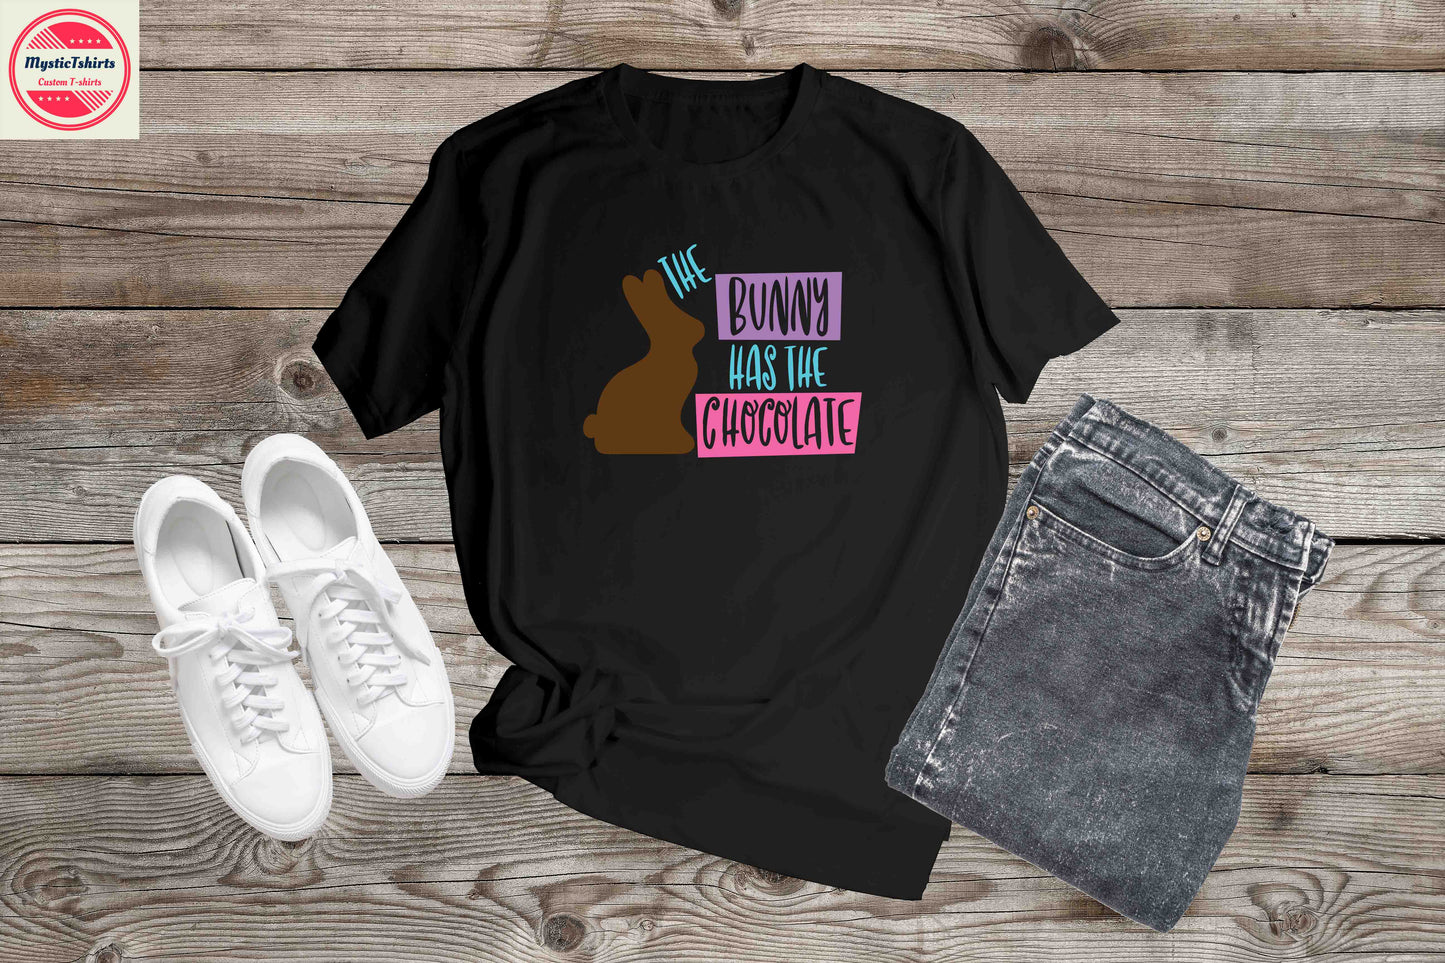 449. THE BUNNY HAS THE CHOCOLATE, Custom Made Shirt, Personalized T-Shirt, Custom Text, Make Your Own Shirt, Custom Tee